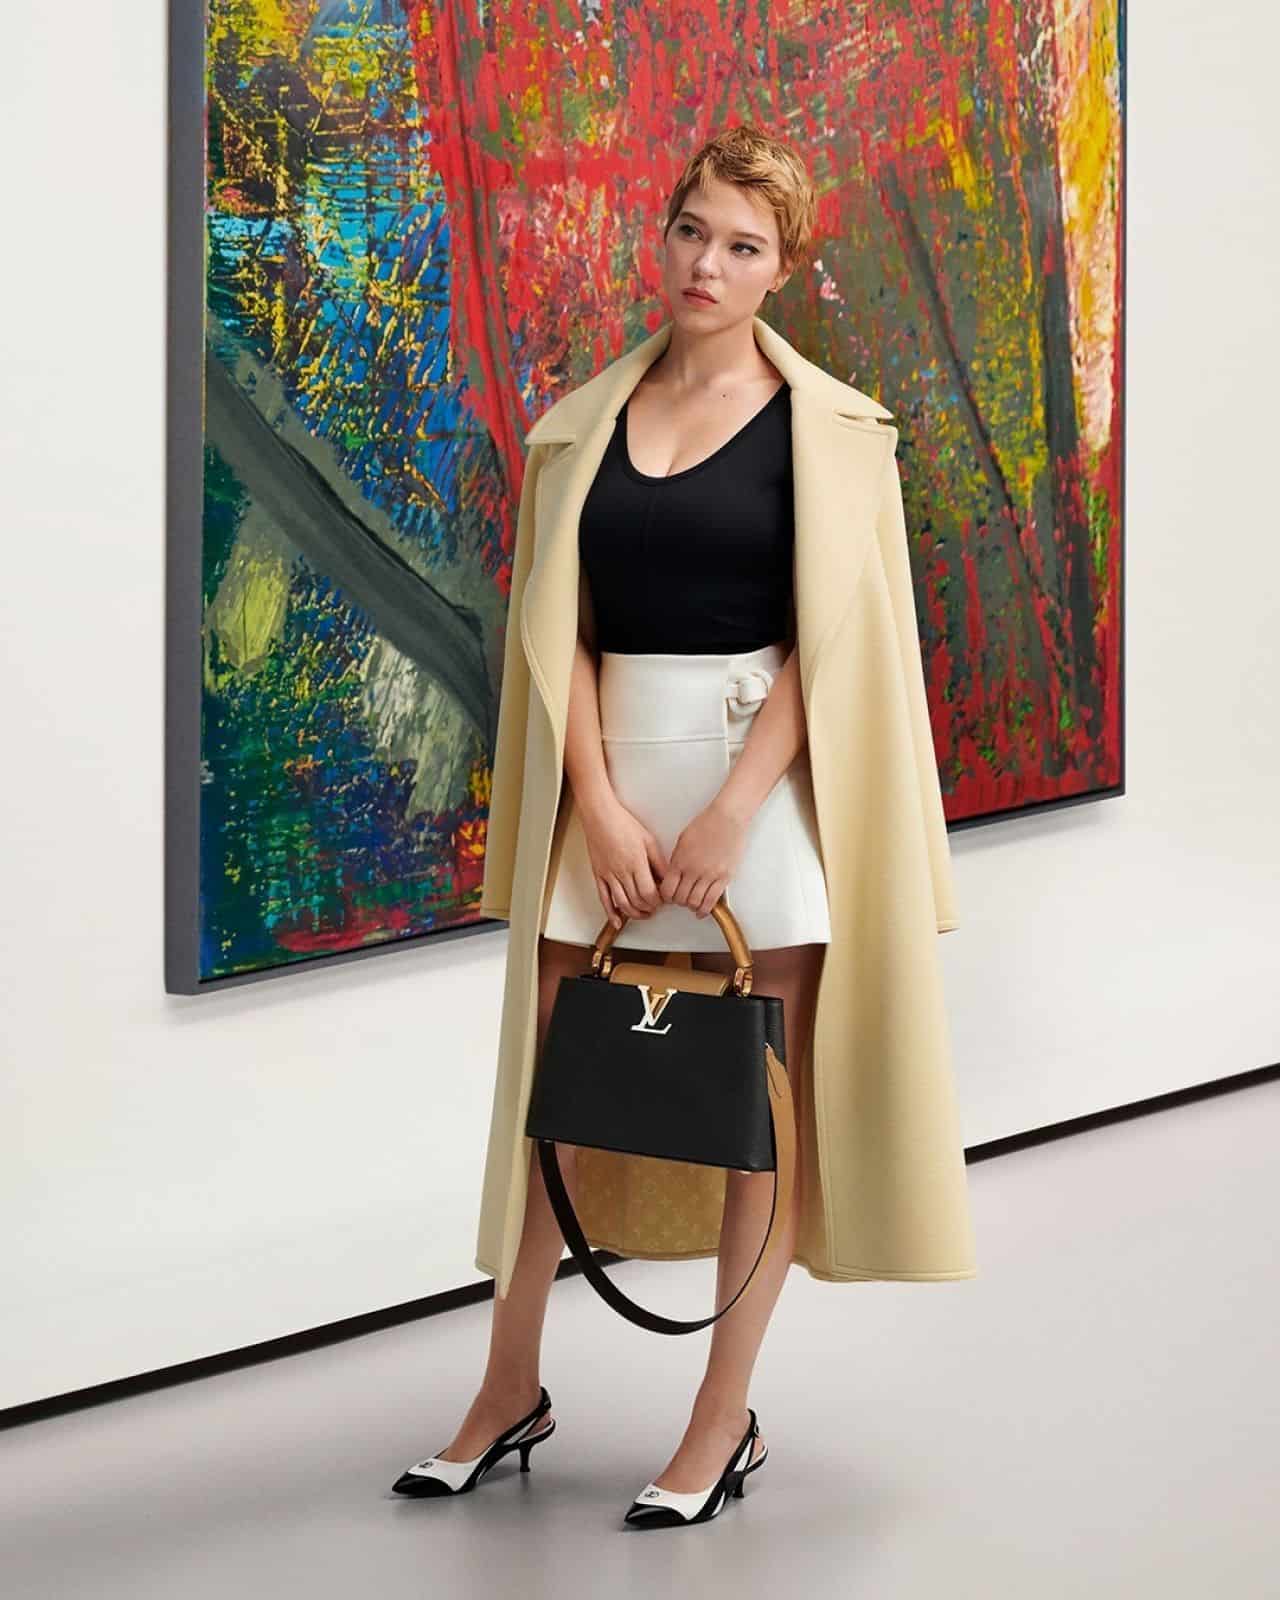 Léa Seydoux Promotes Louis Vuitton’s New Fall-Winter 2021 Bags Collection